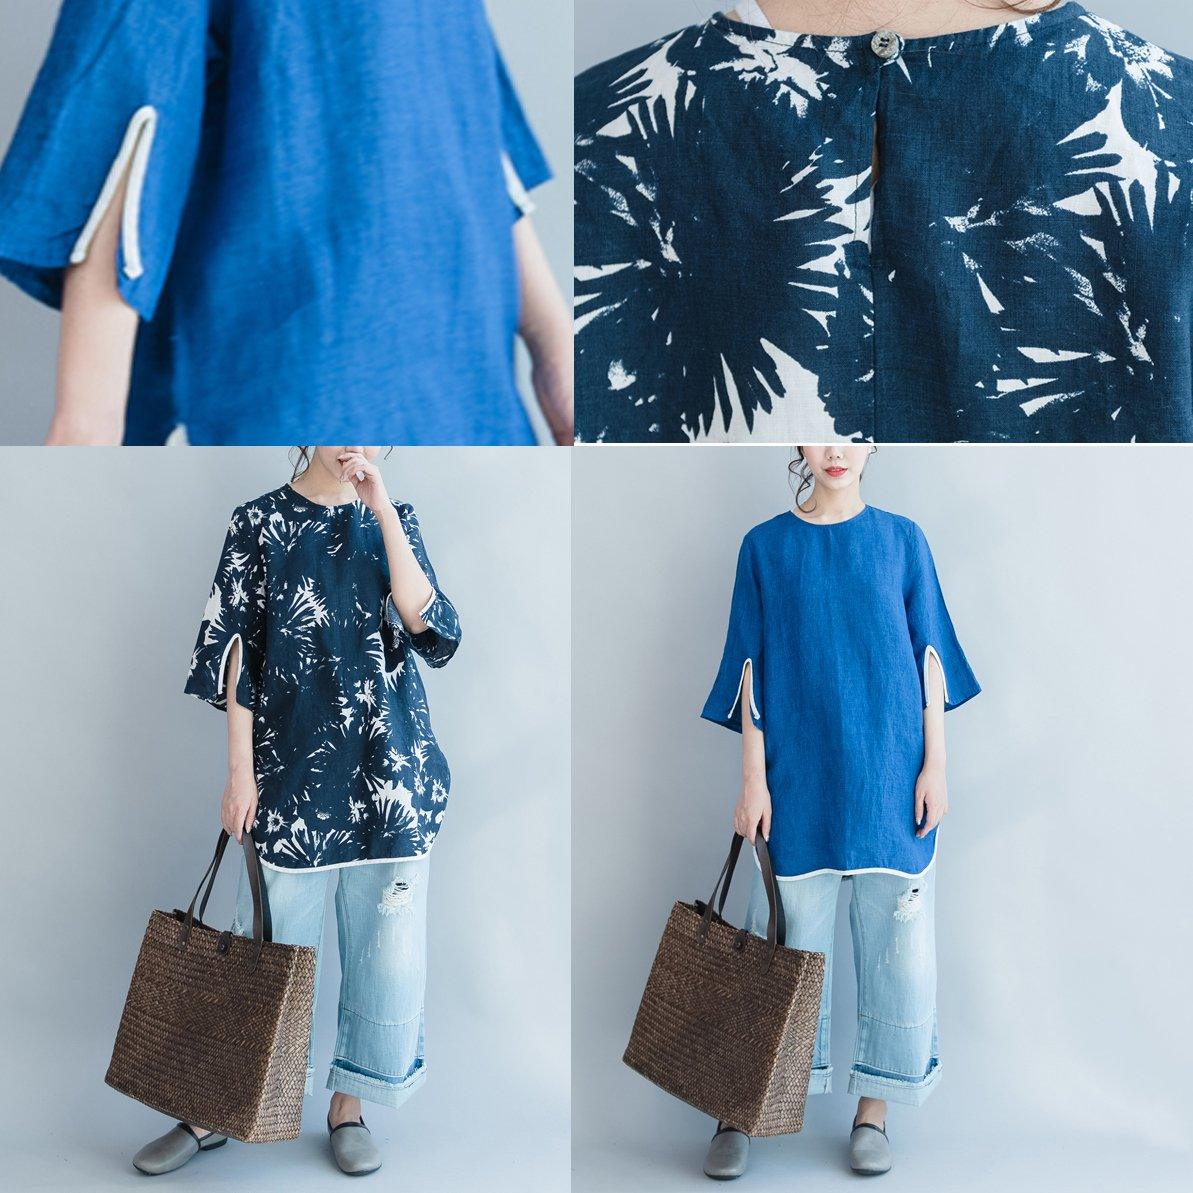 fine linen dresses blue causal sundress plus size summer dress  stylish half sleeve mid dress - Omychic